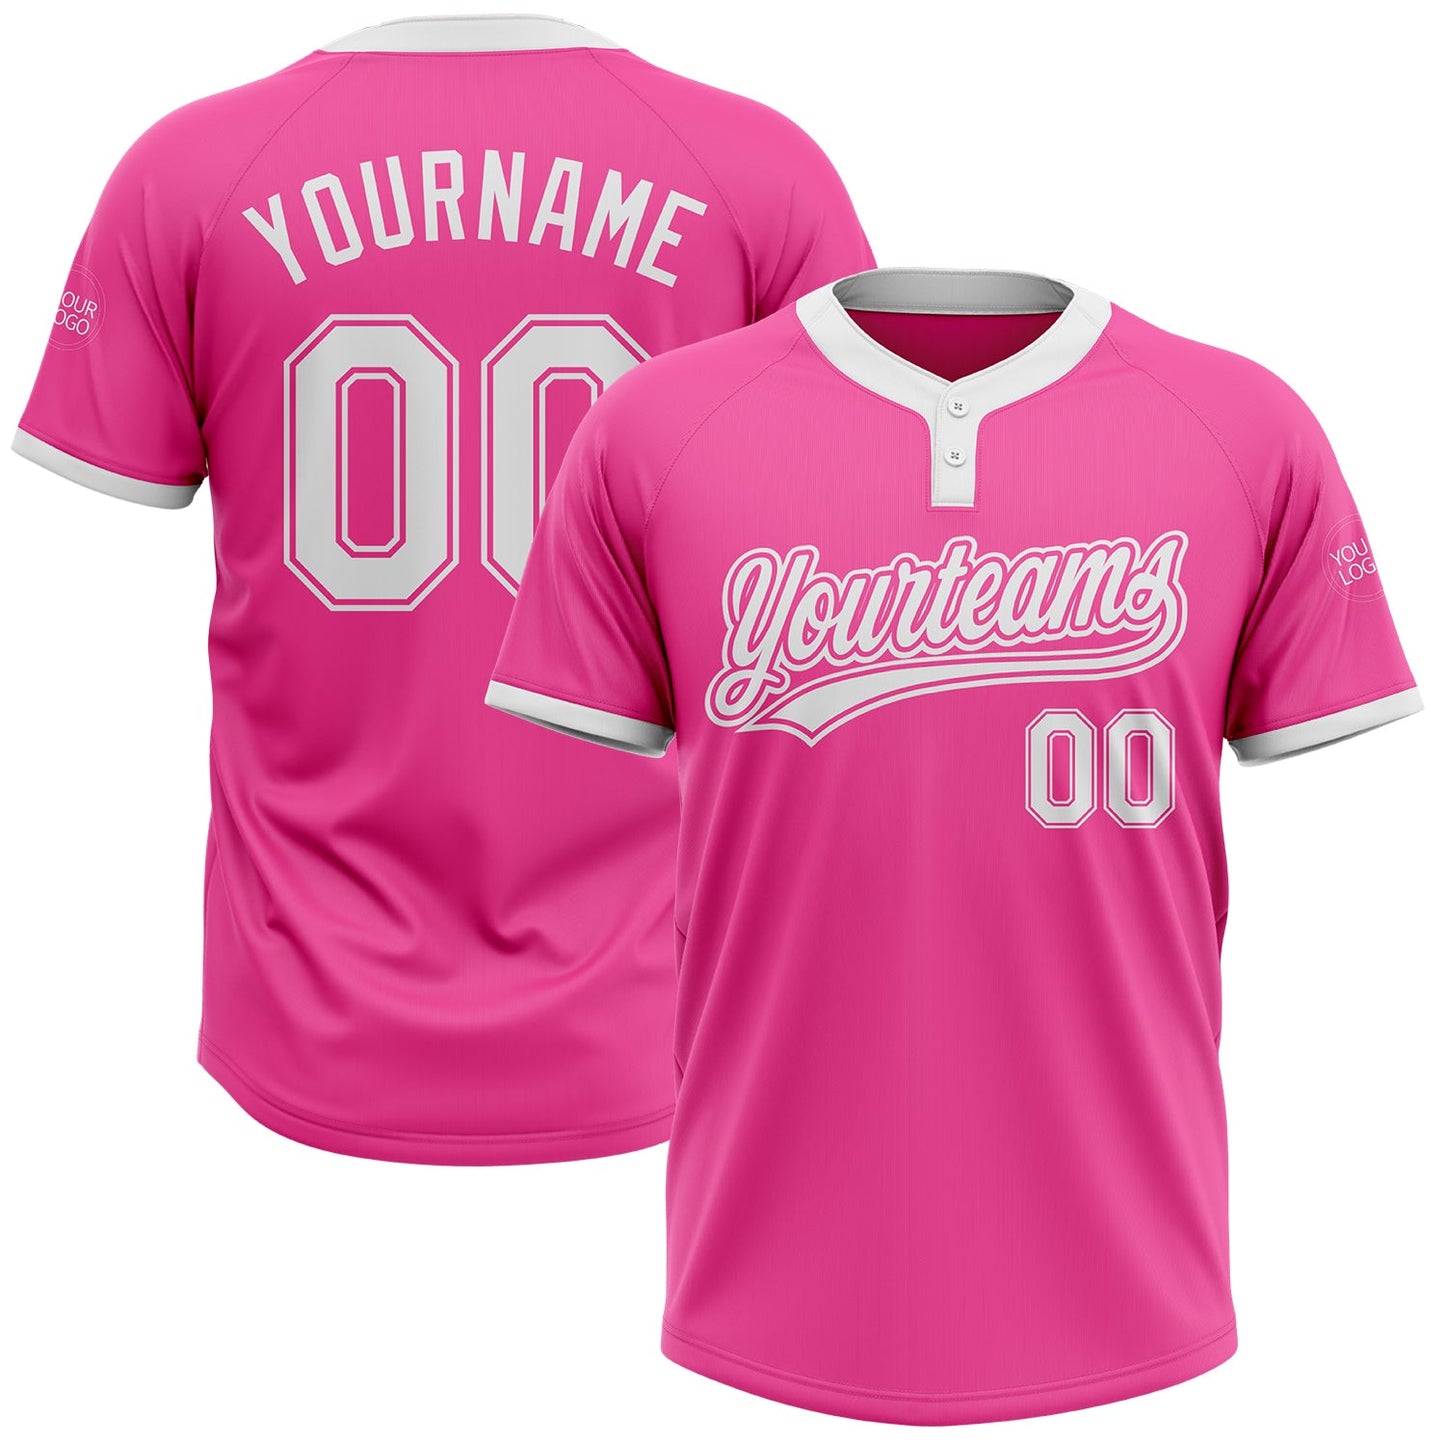 Custom Pink White Two-Button Unisex Softball Jersey